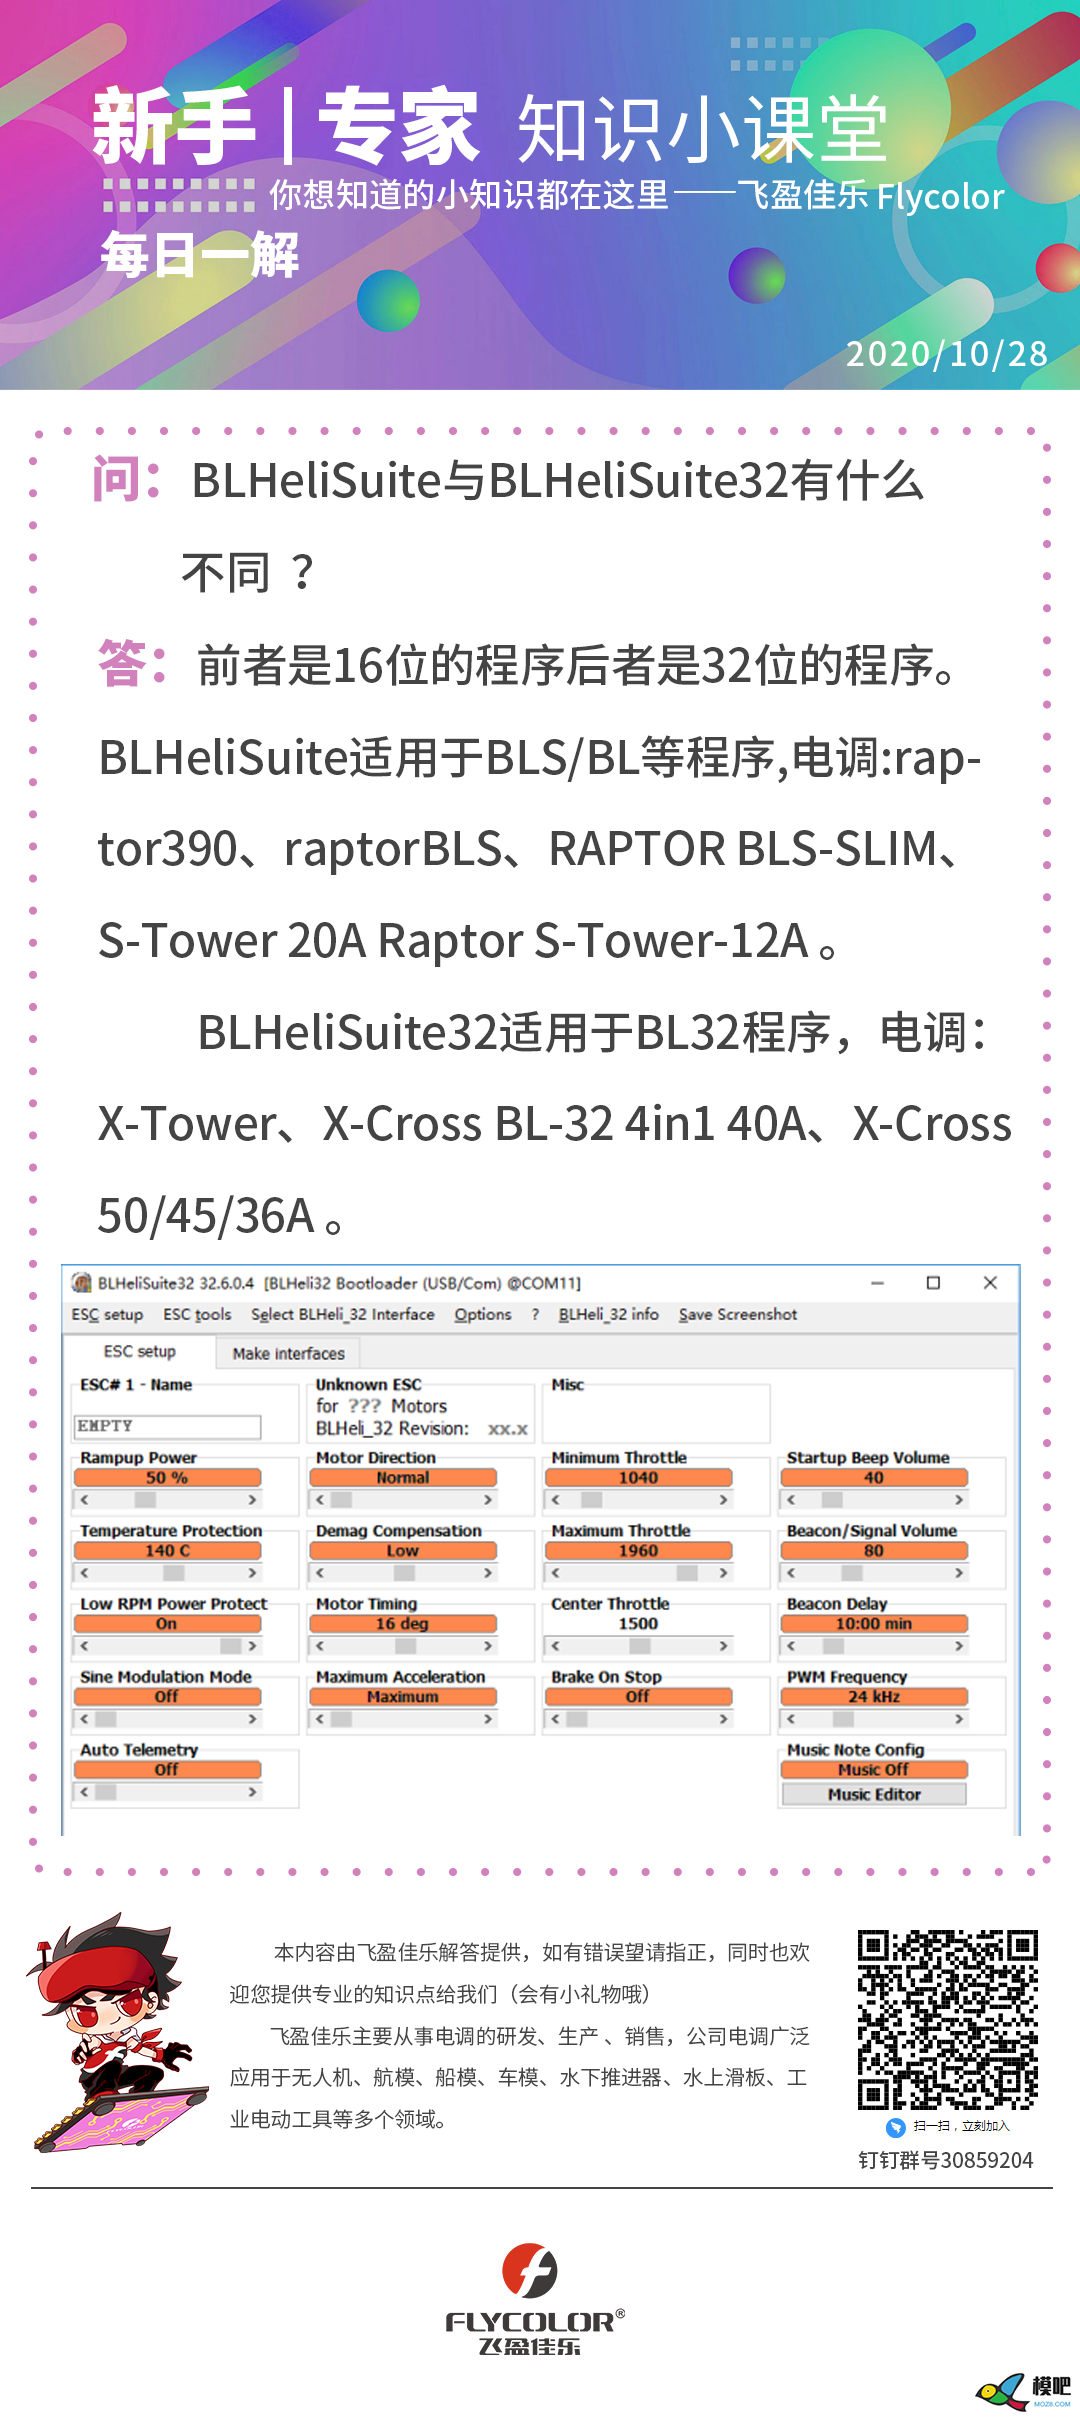 BLHeliSuite与BLHeliSuite32有什么不同？ 电调,BLheli,trapcode suite,blhelisuite32 作者:梦想的力量 8507 